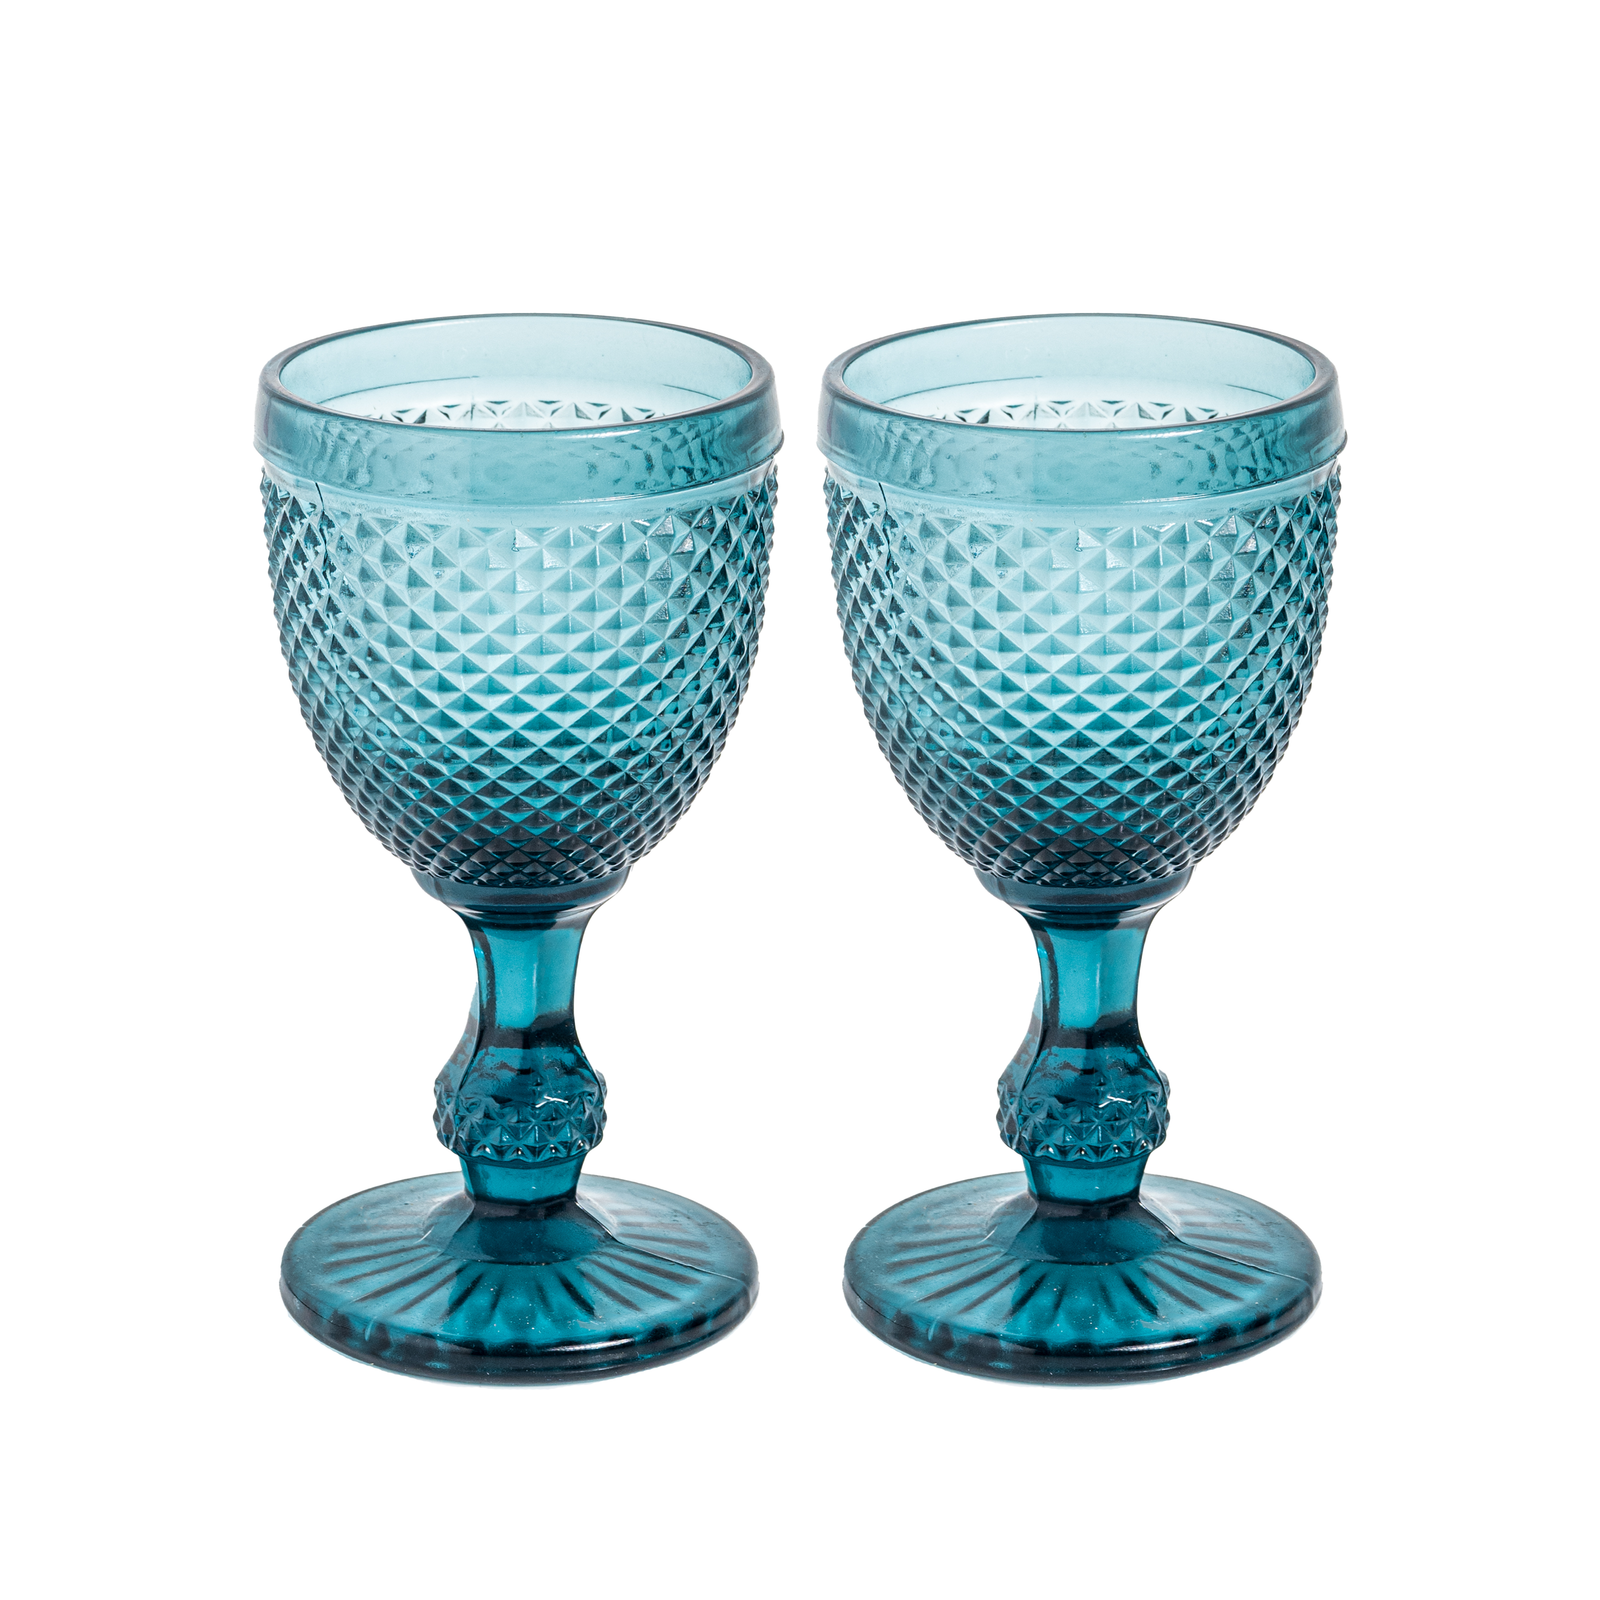 King’s Goblet Wine Glass 270ml - Set of 2, Blue